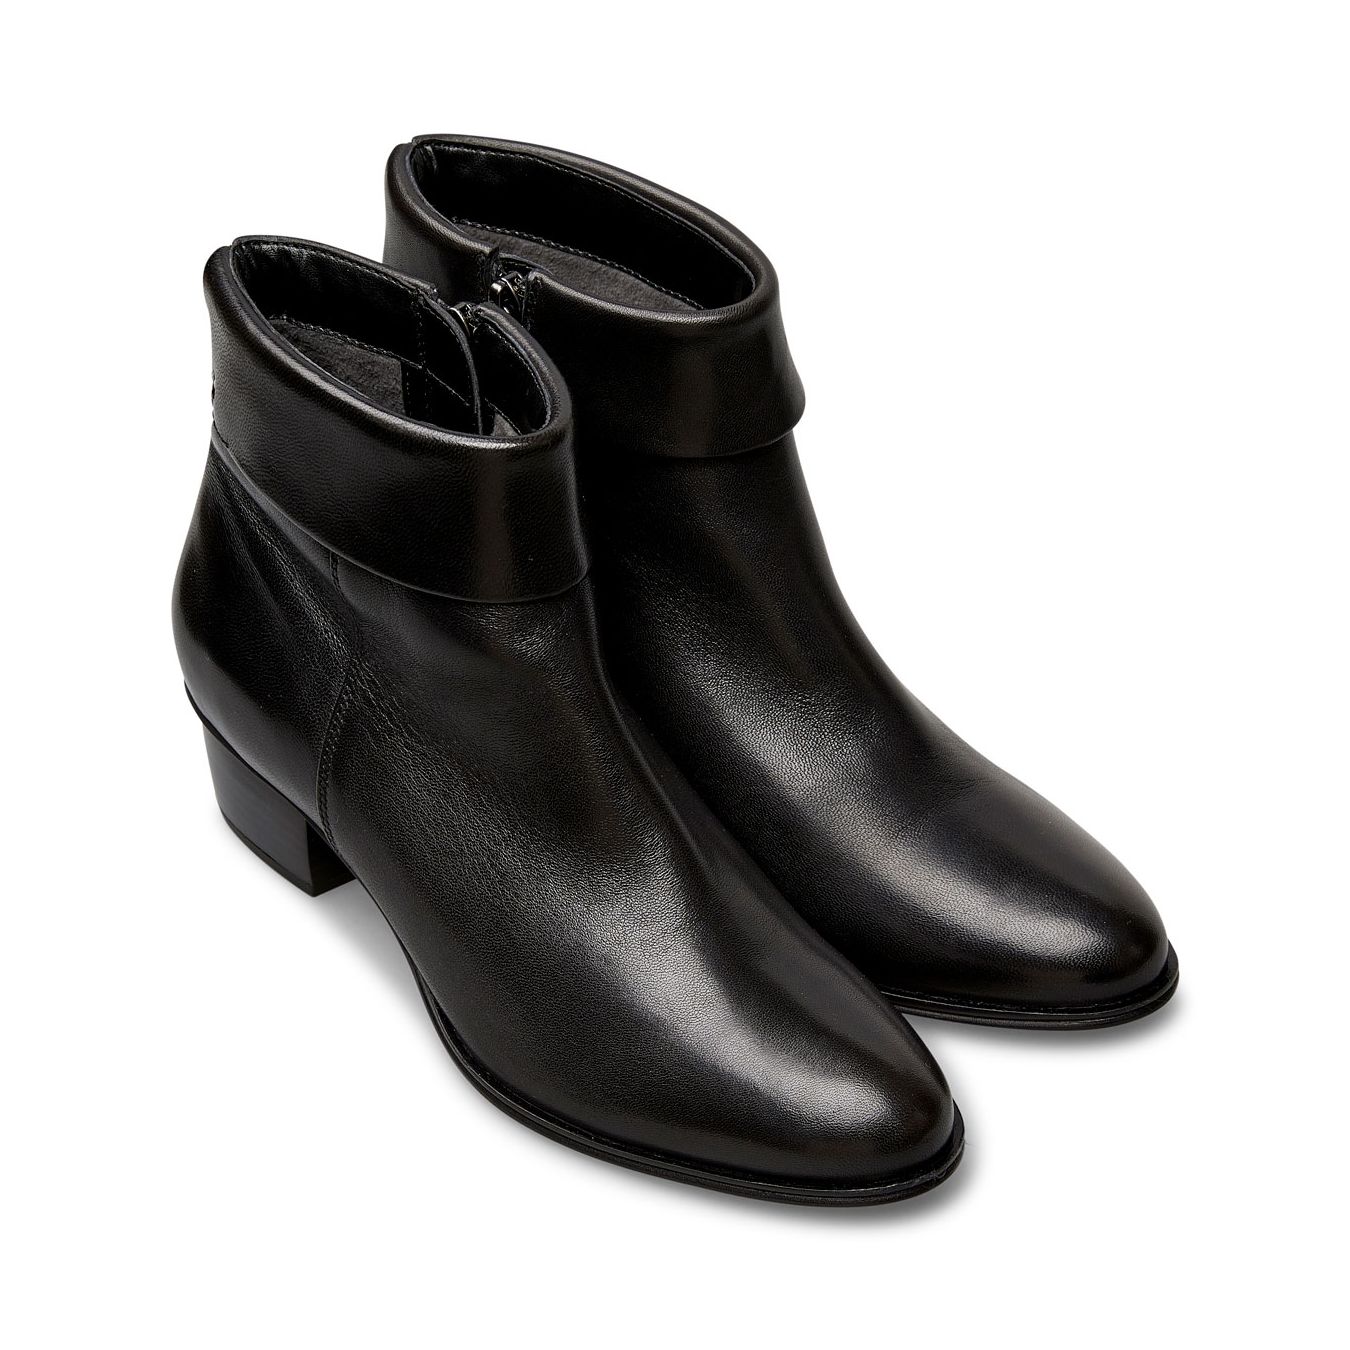 Van Dal Dove 3067 1001 Ladies Black Leather Side Zip Ankle Boots